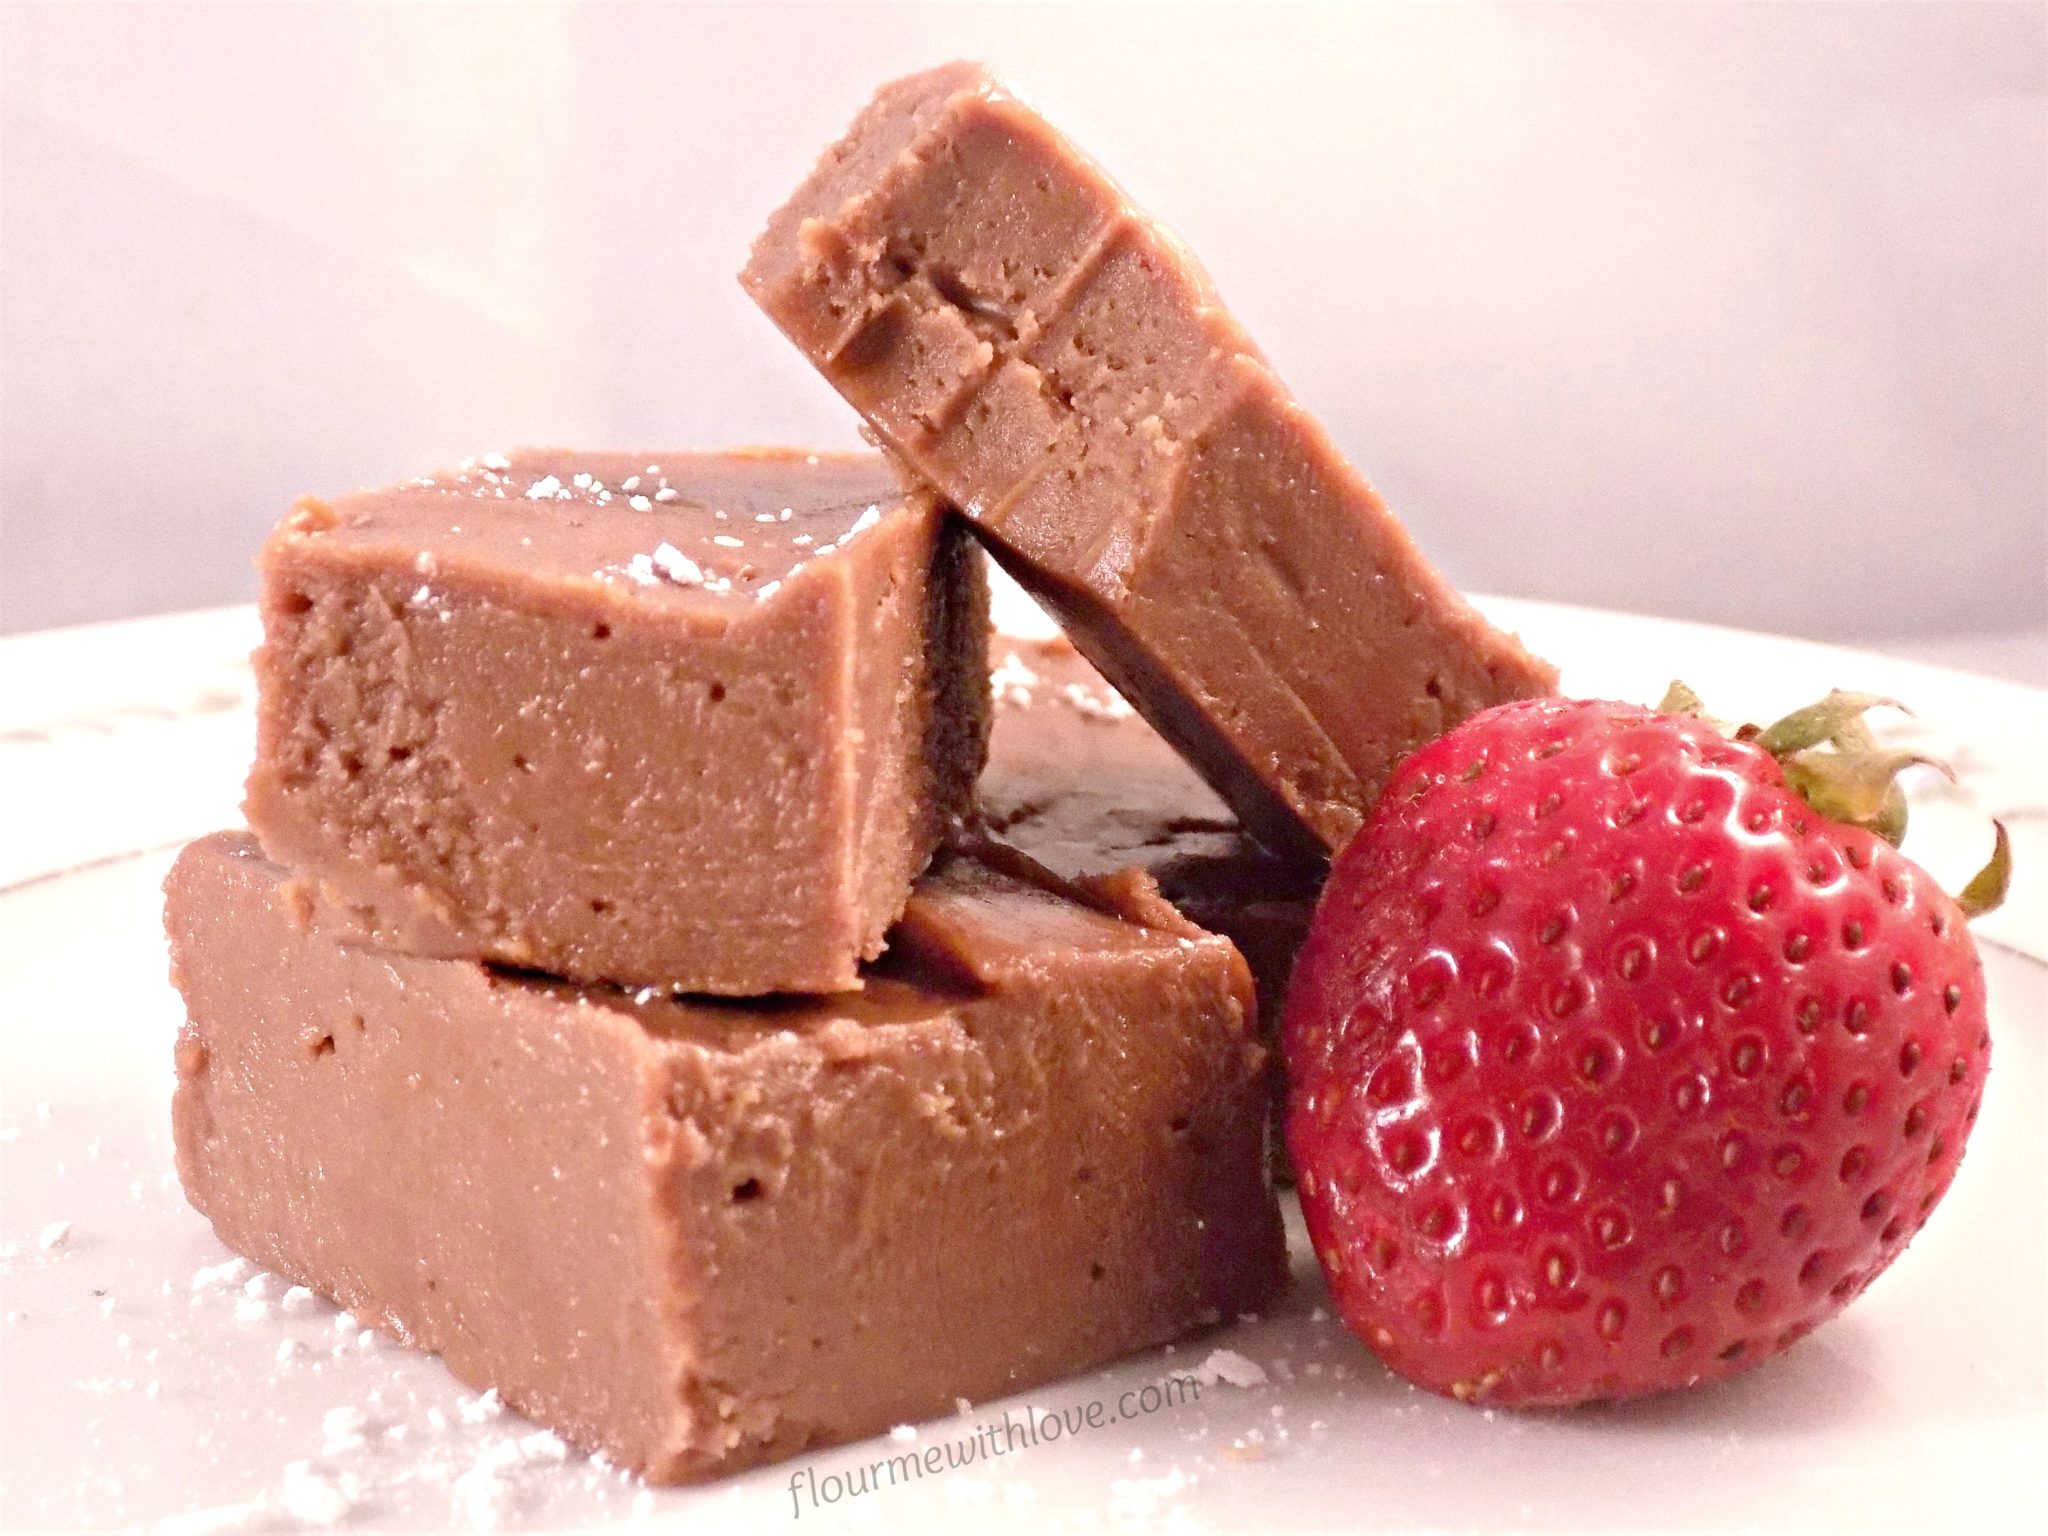 Easy Creamy Chocolate Hazelnut (Nutella) Fudge made in the microwave!